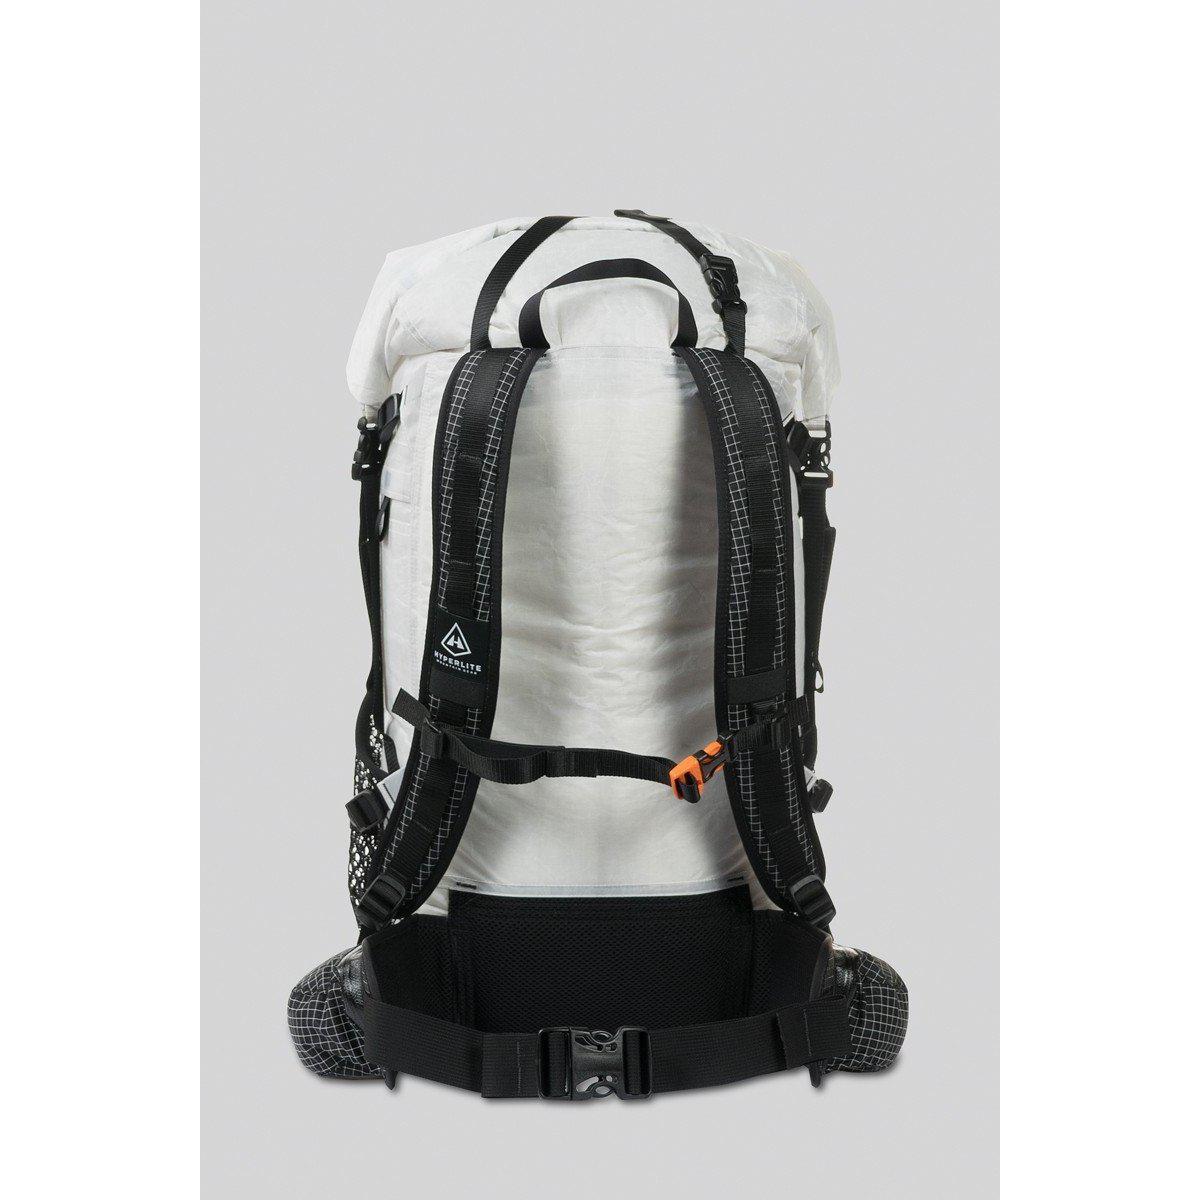 Hyperlite Mountain Gear 40 Windrider Ultralight Backpack – 2 Foot